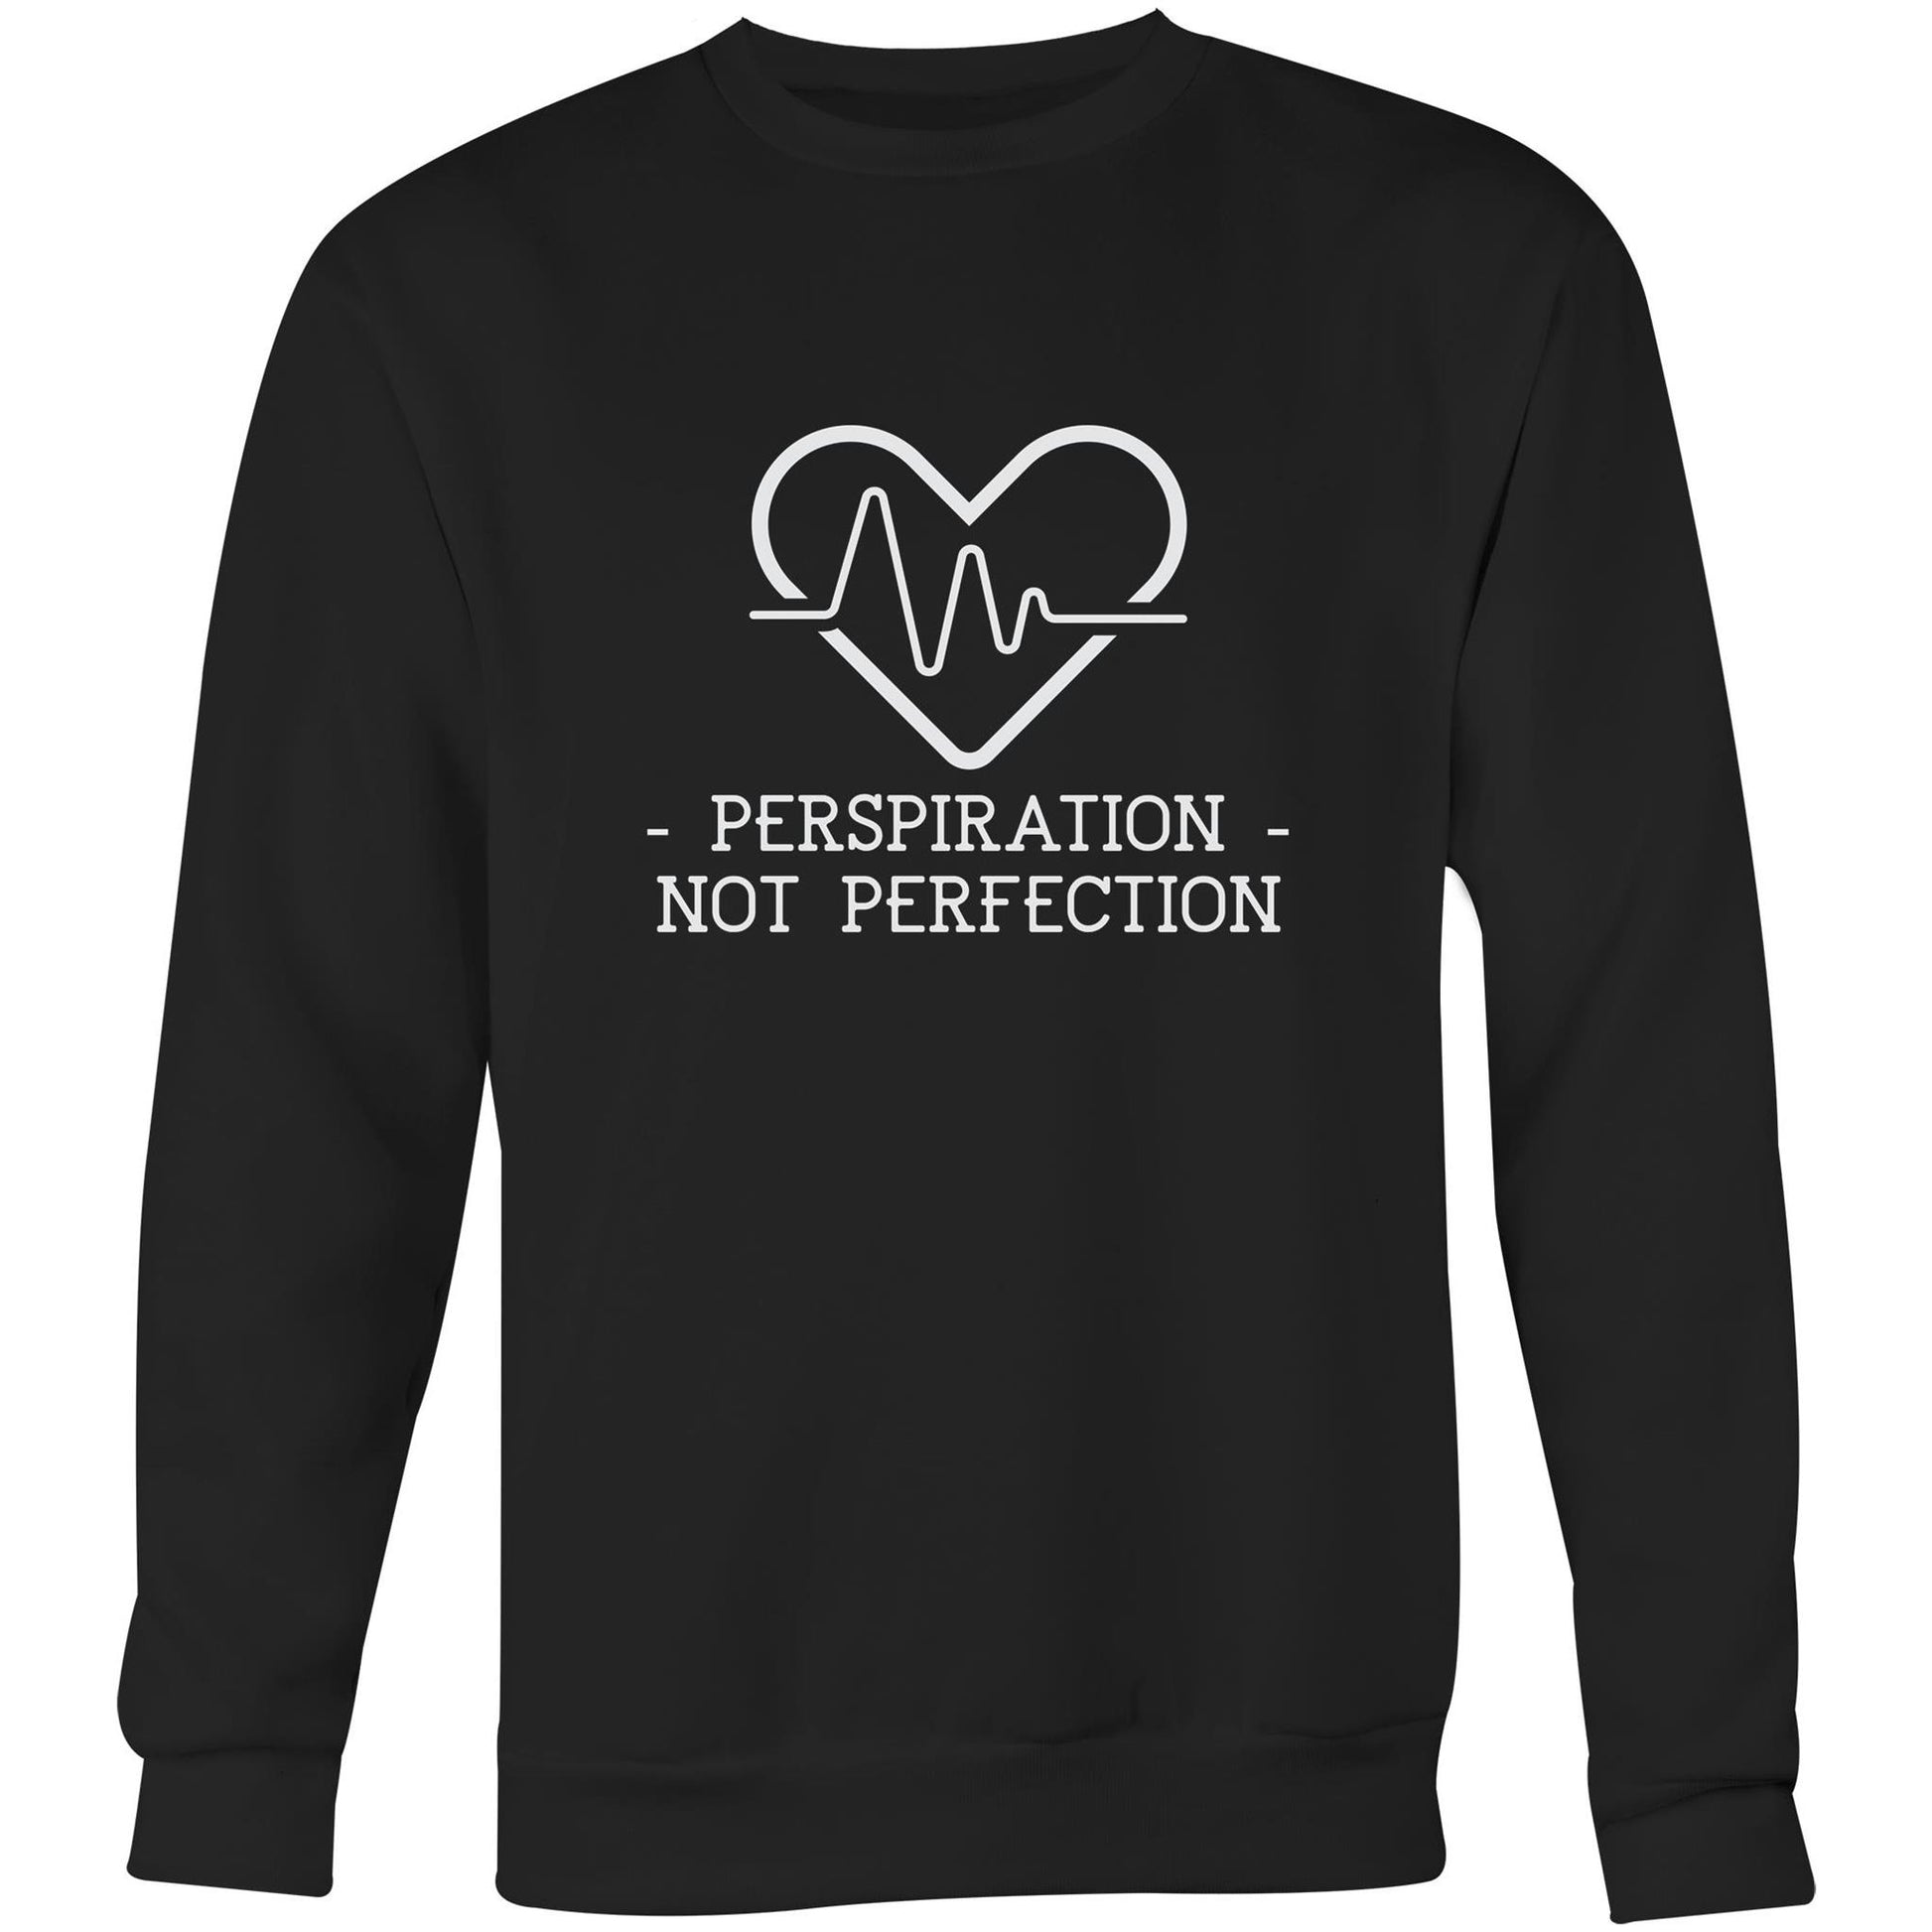 Perspiration Not Perfection - Crew Sweatshirt Black Sweatshirt Mens Womens